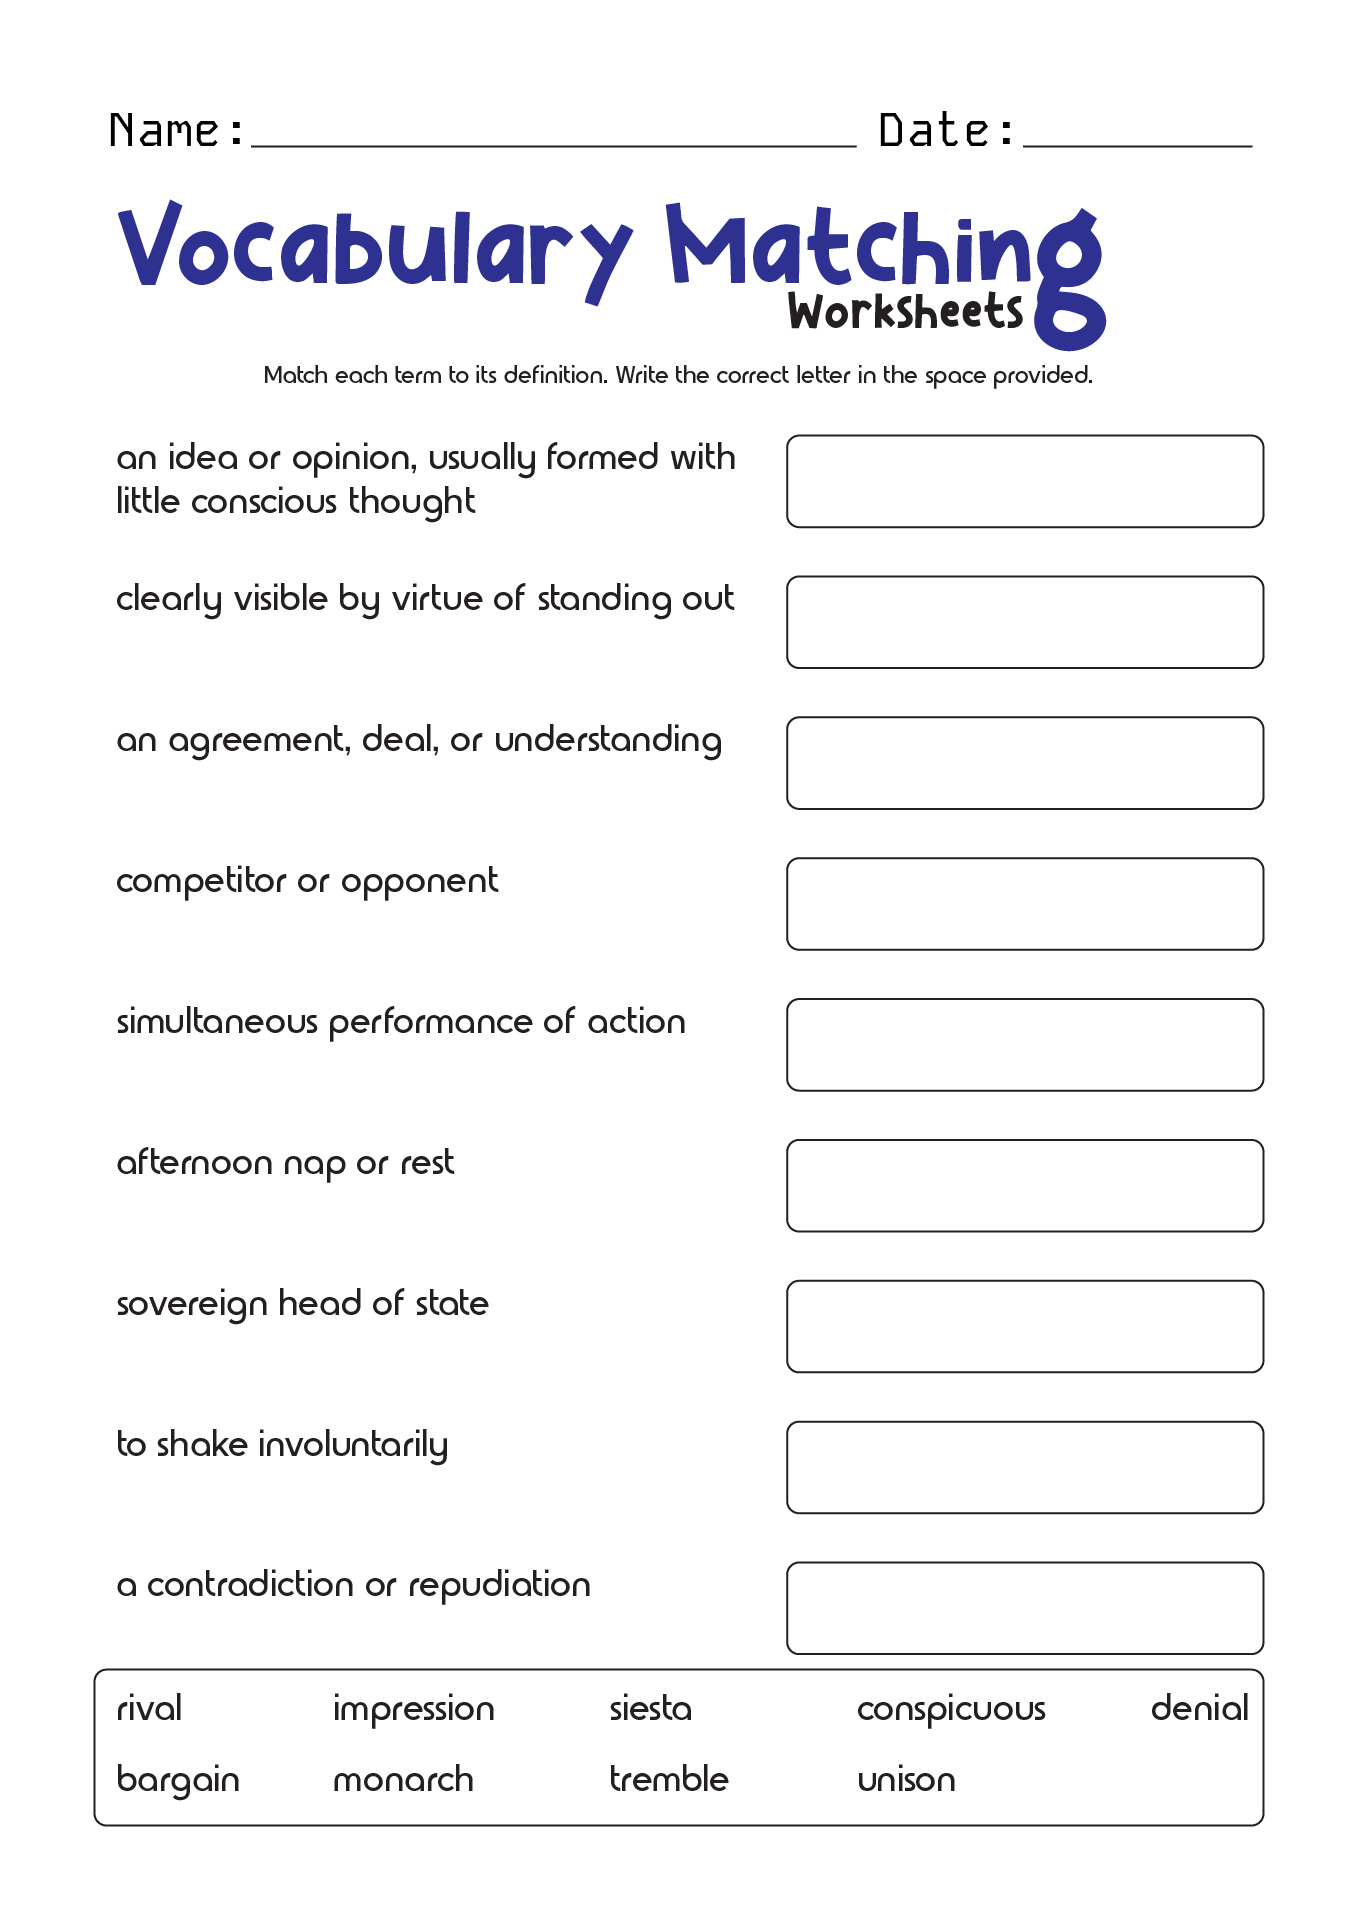 Vocabulary Matching Worksheets